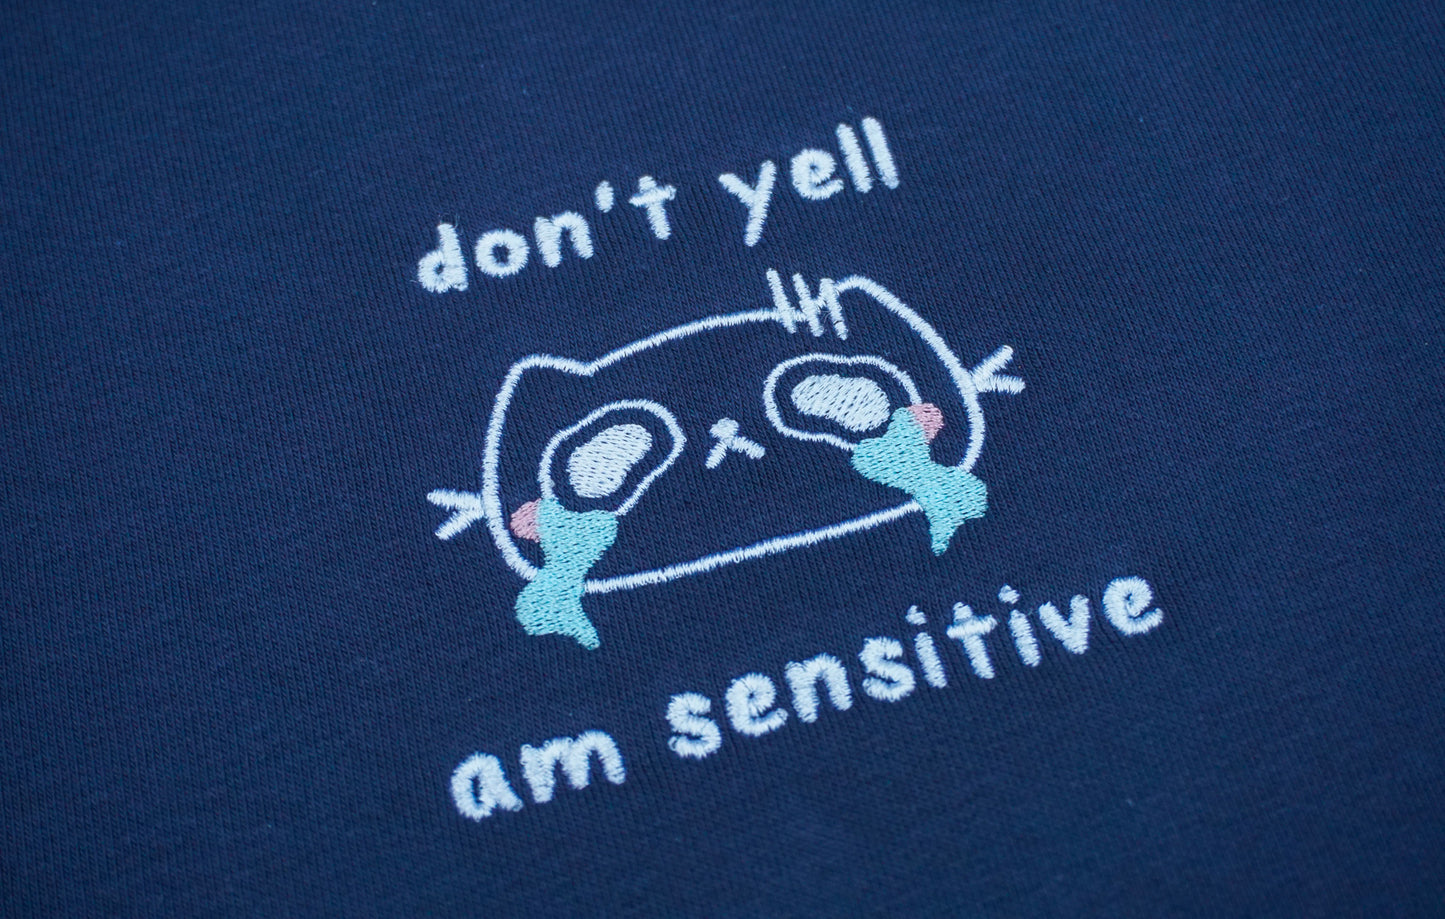 Don't Yell, Am Sensitive Crewneck